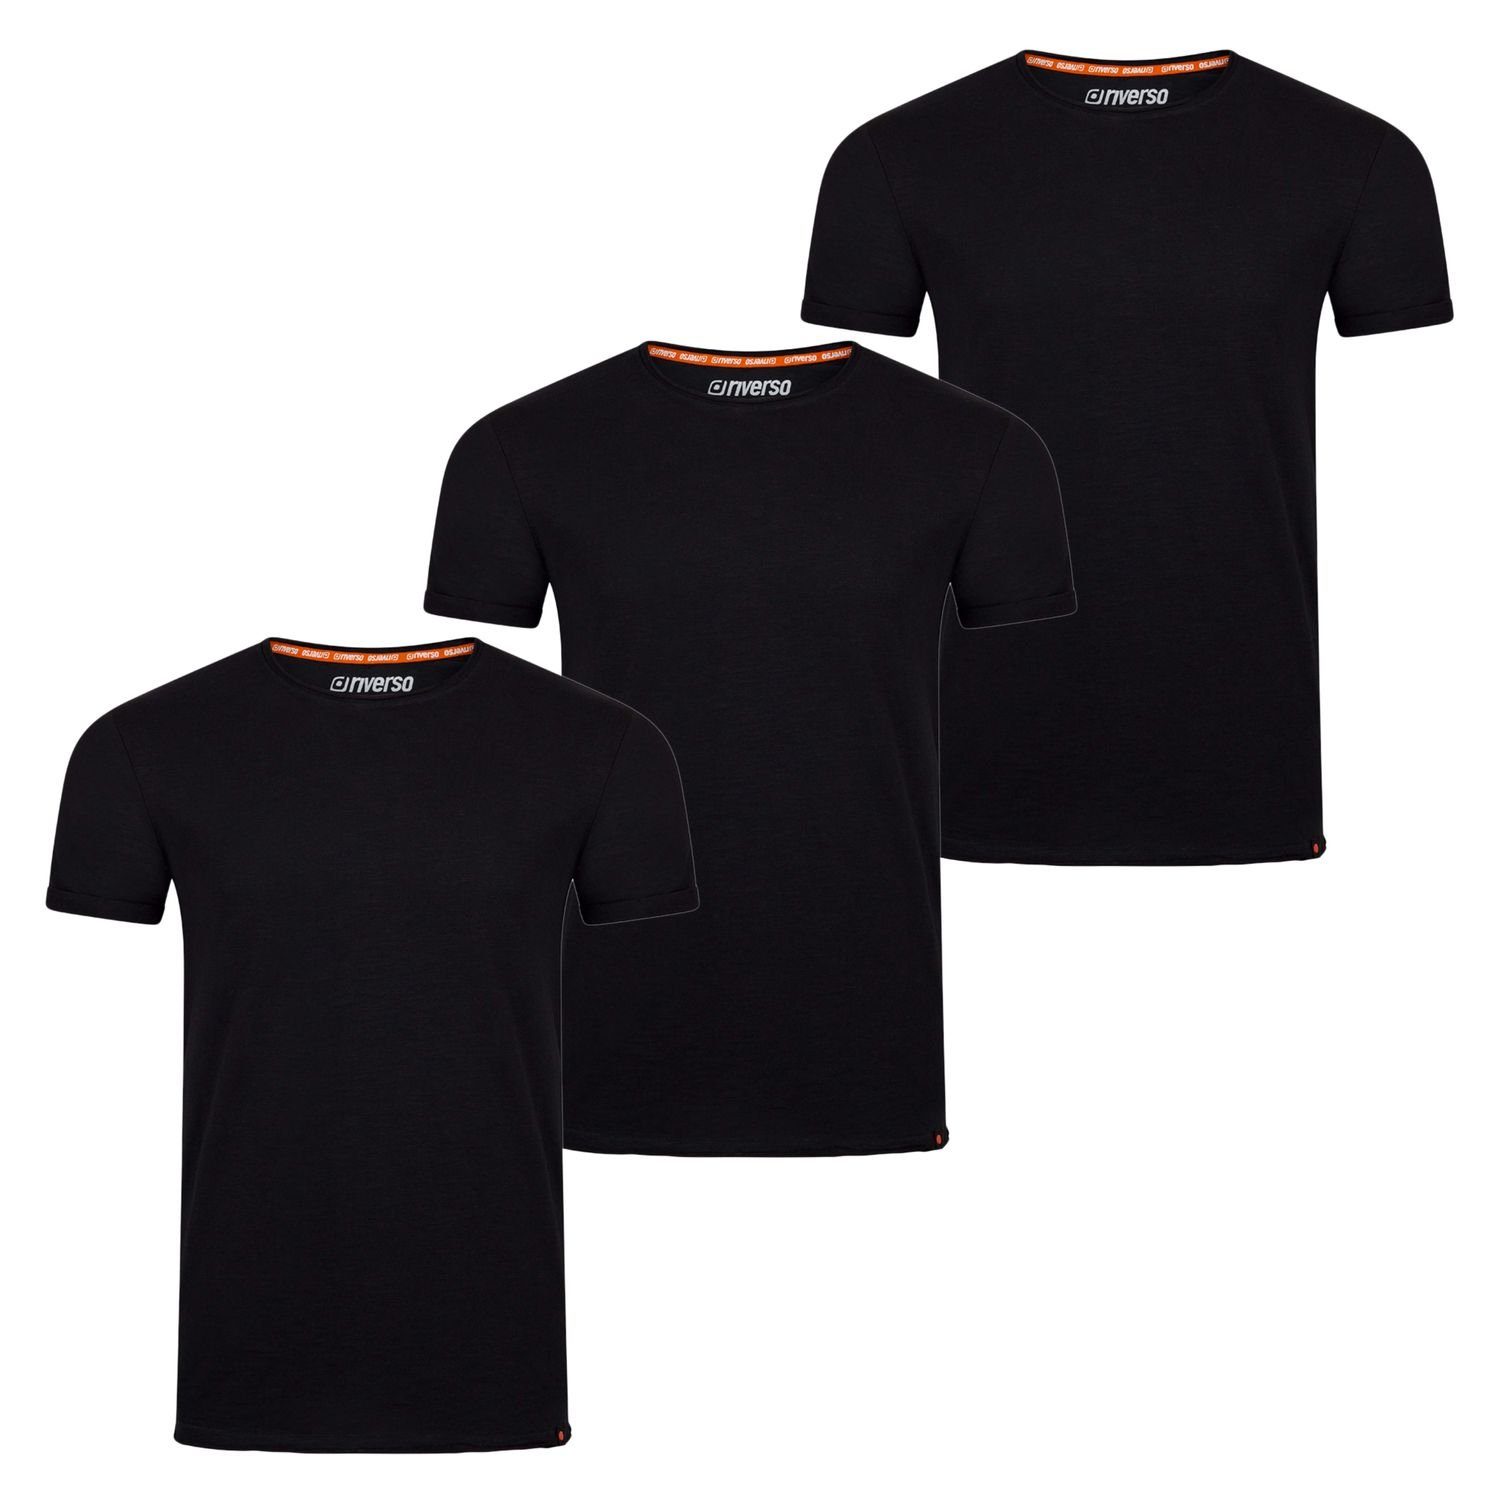 riverso T-Shirt Herren Basic Shirt RIVLenny Regular Fit (3-tlg) Kurzarm Tee Shirt mit Rundhalsausschnitt aus 100% Baumwolle Black